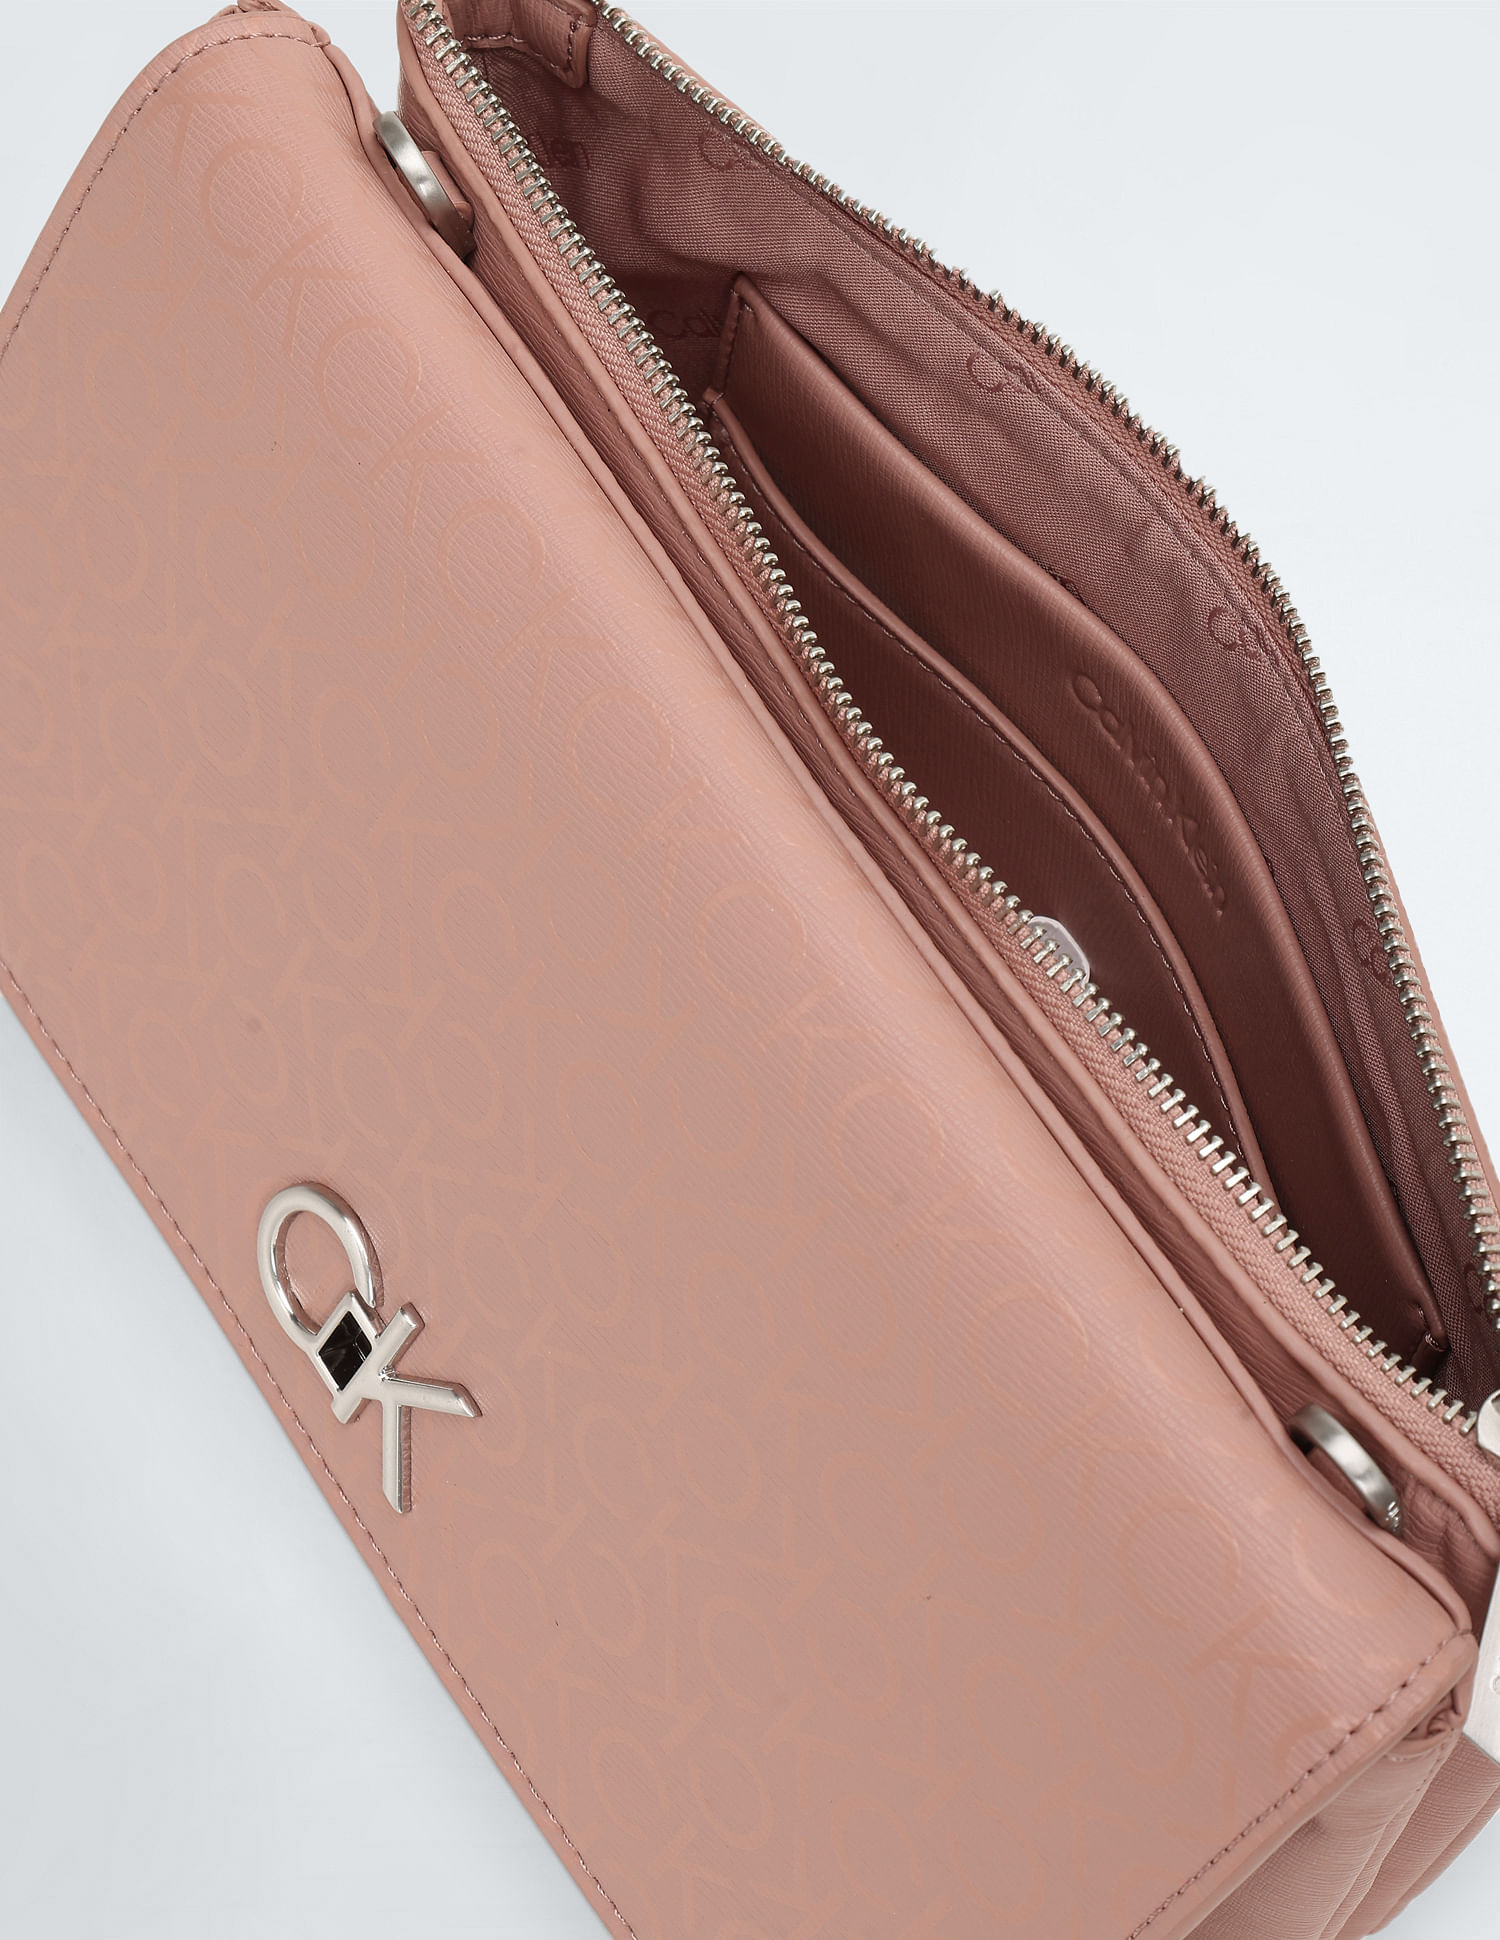 Calvin Klein Mini Saffiano Crossbody - Handbags & Accessories - Macy's |  Purses, Leather crossbody purse, Calvin klein bag